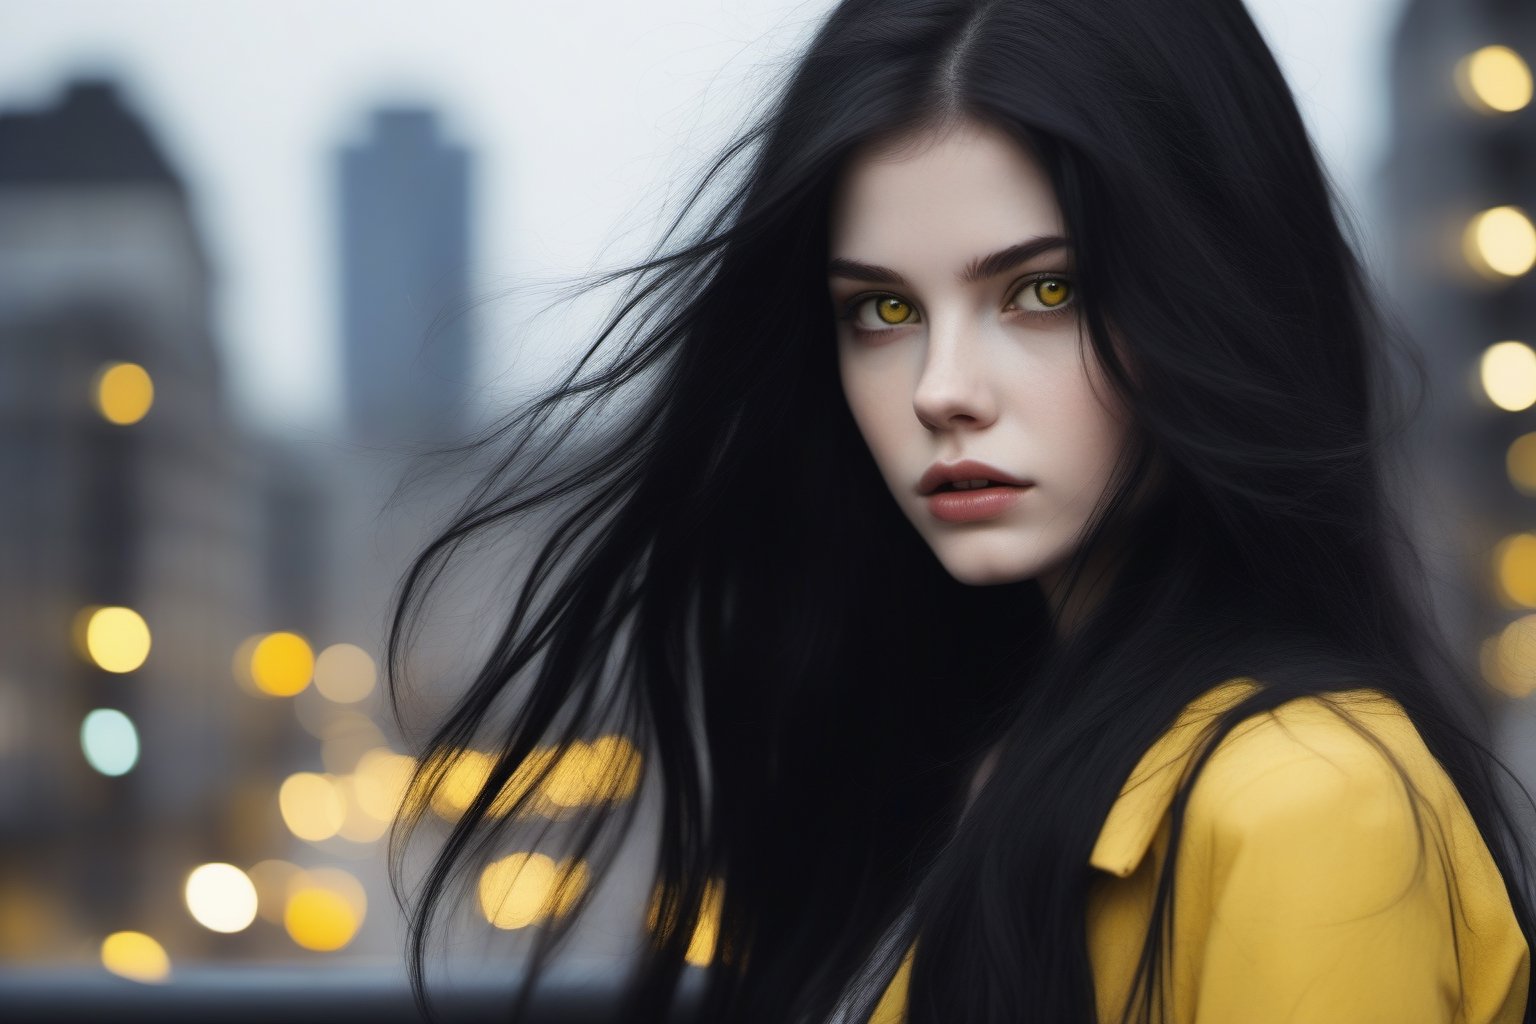 woman,18_years, yellow_eyes, black_long_hair, pale_skin, city,more detail XL